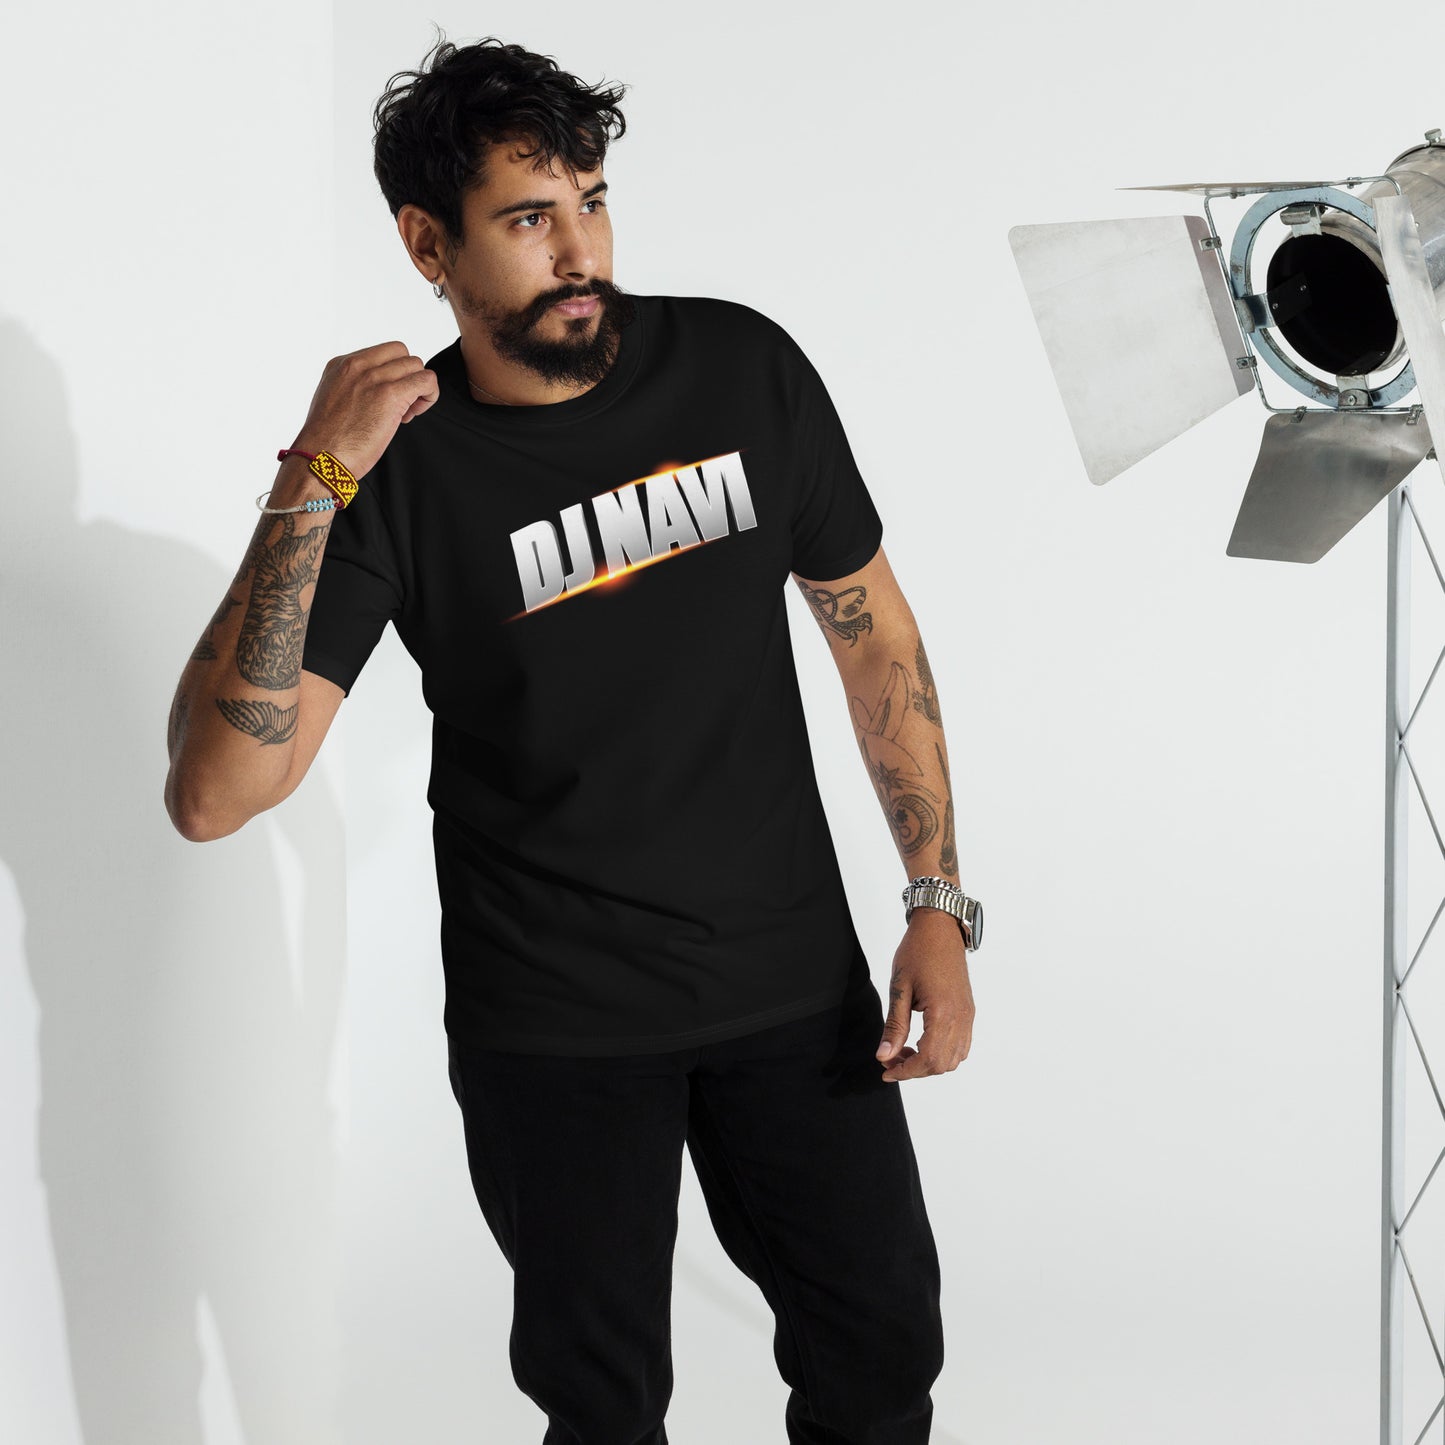 DJ Navi Tee Shirt